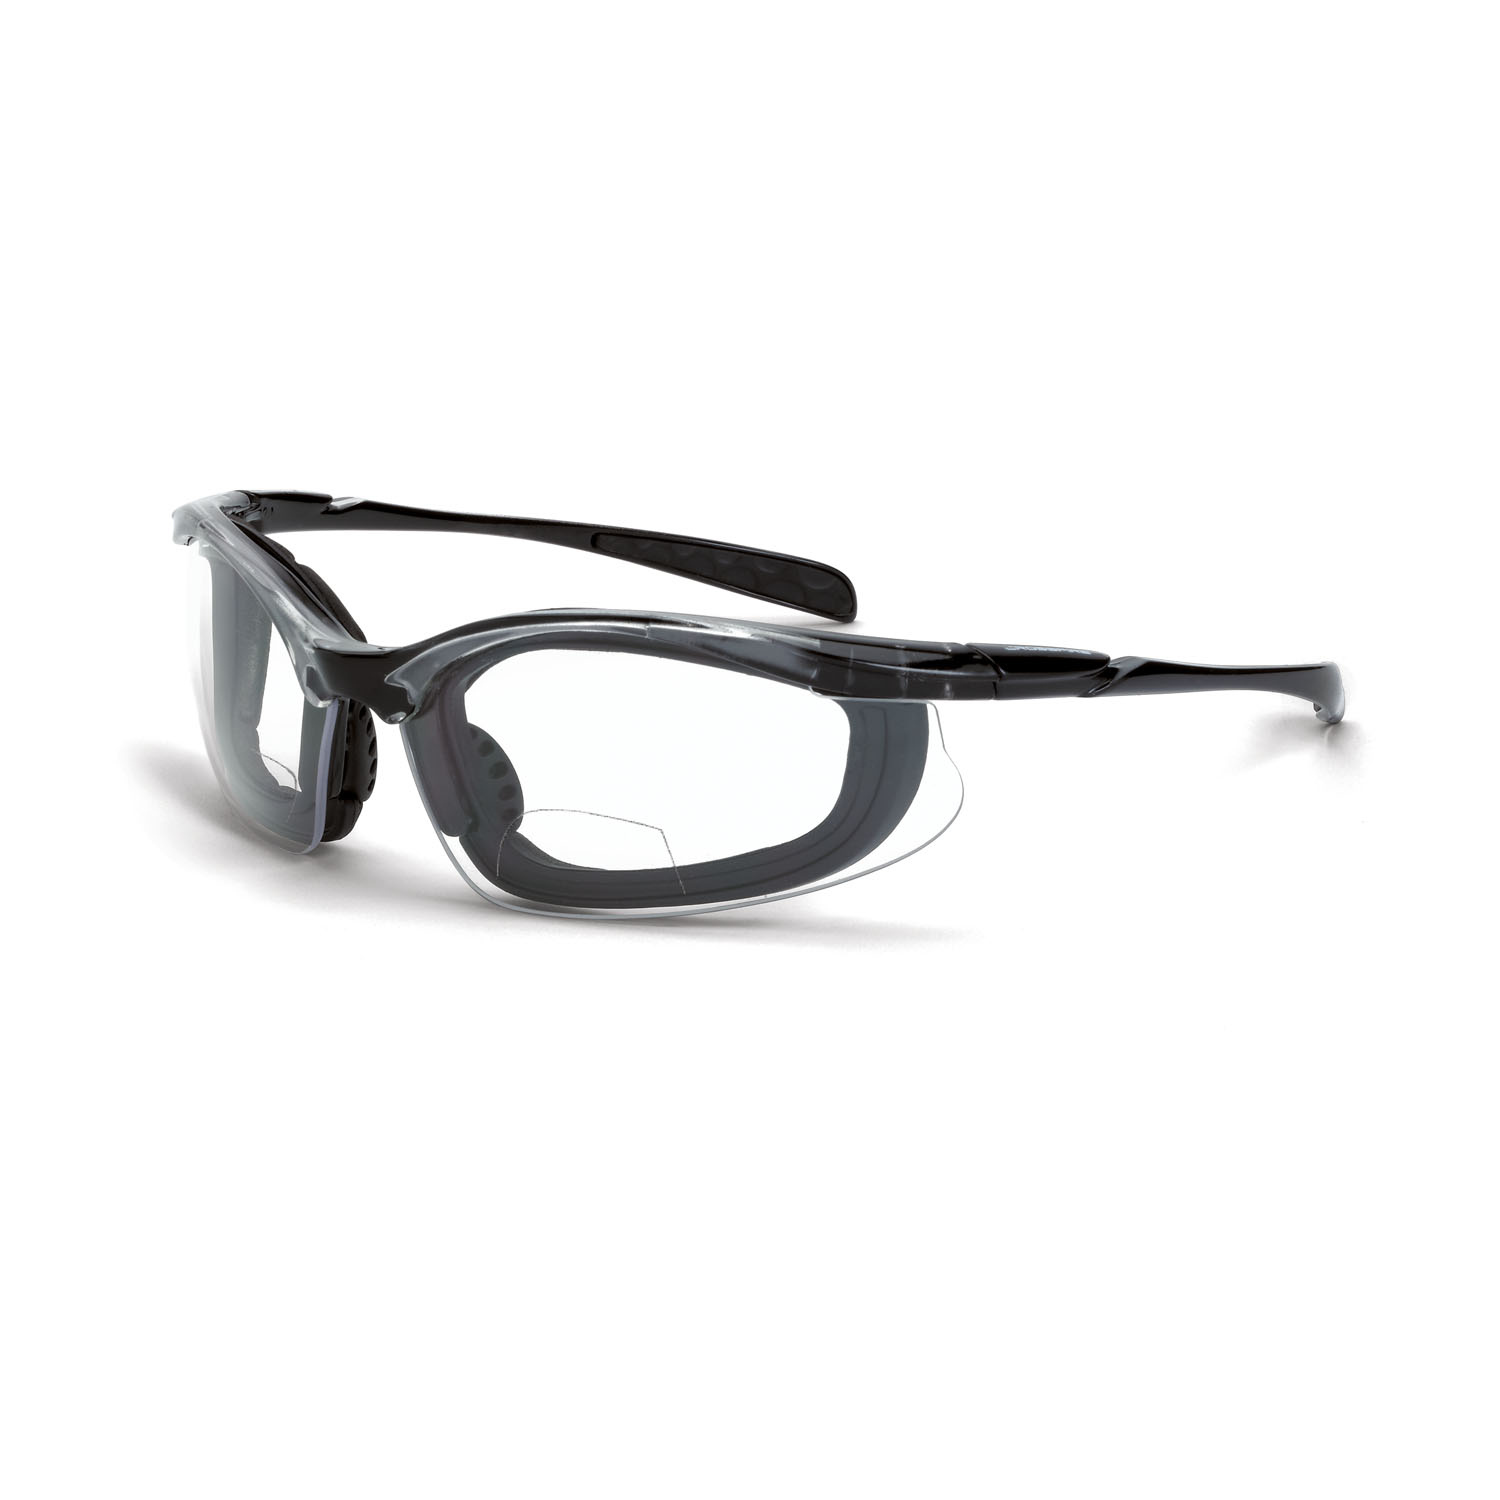 Concept Foam Lined Bifocal Safety Eyewear - Crystal Black Frame - Clear Lens - 2.5 Diopter